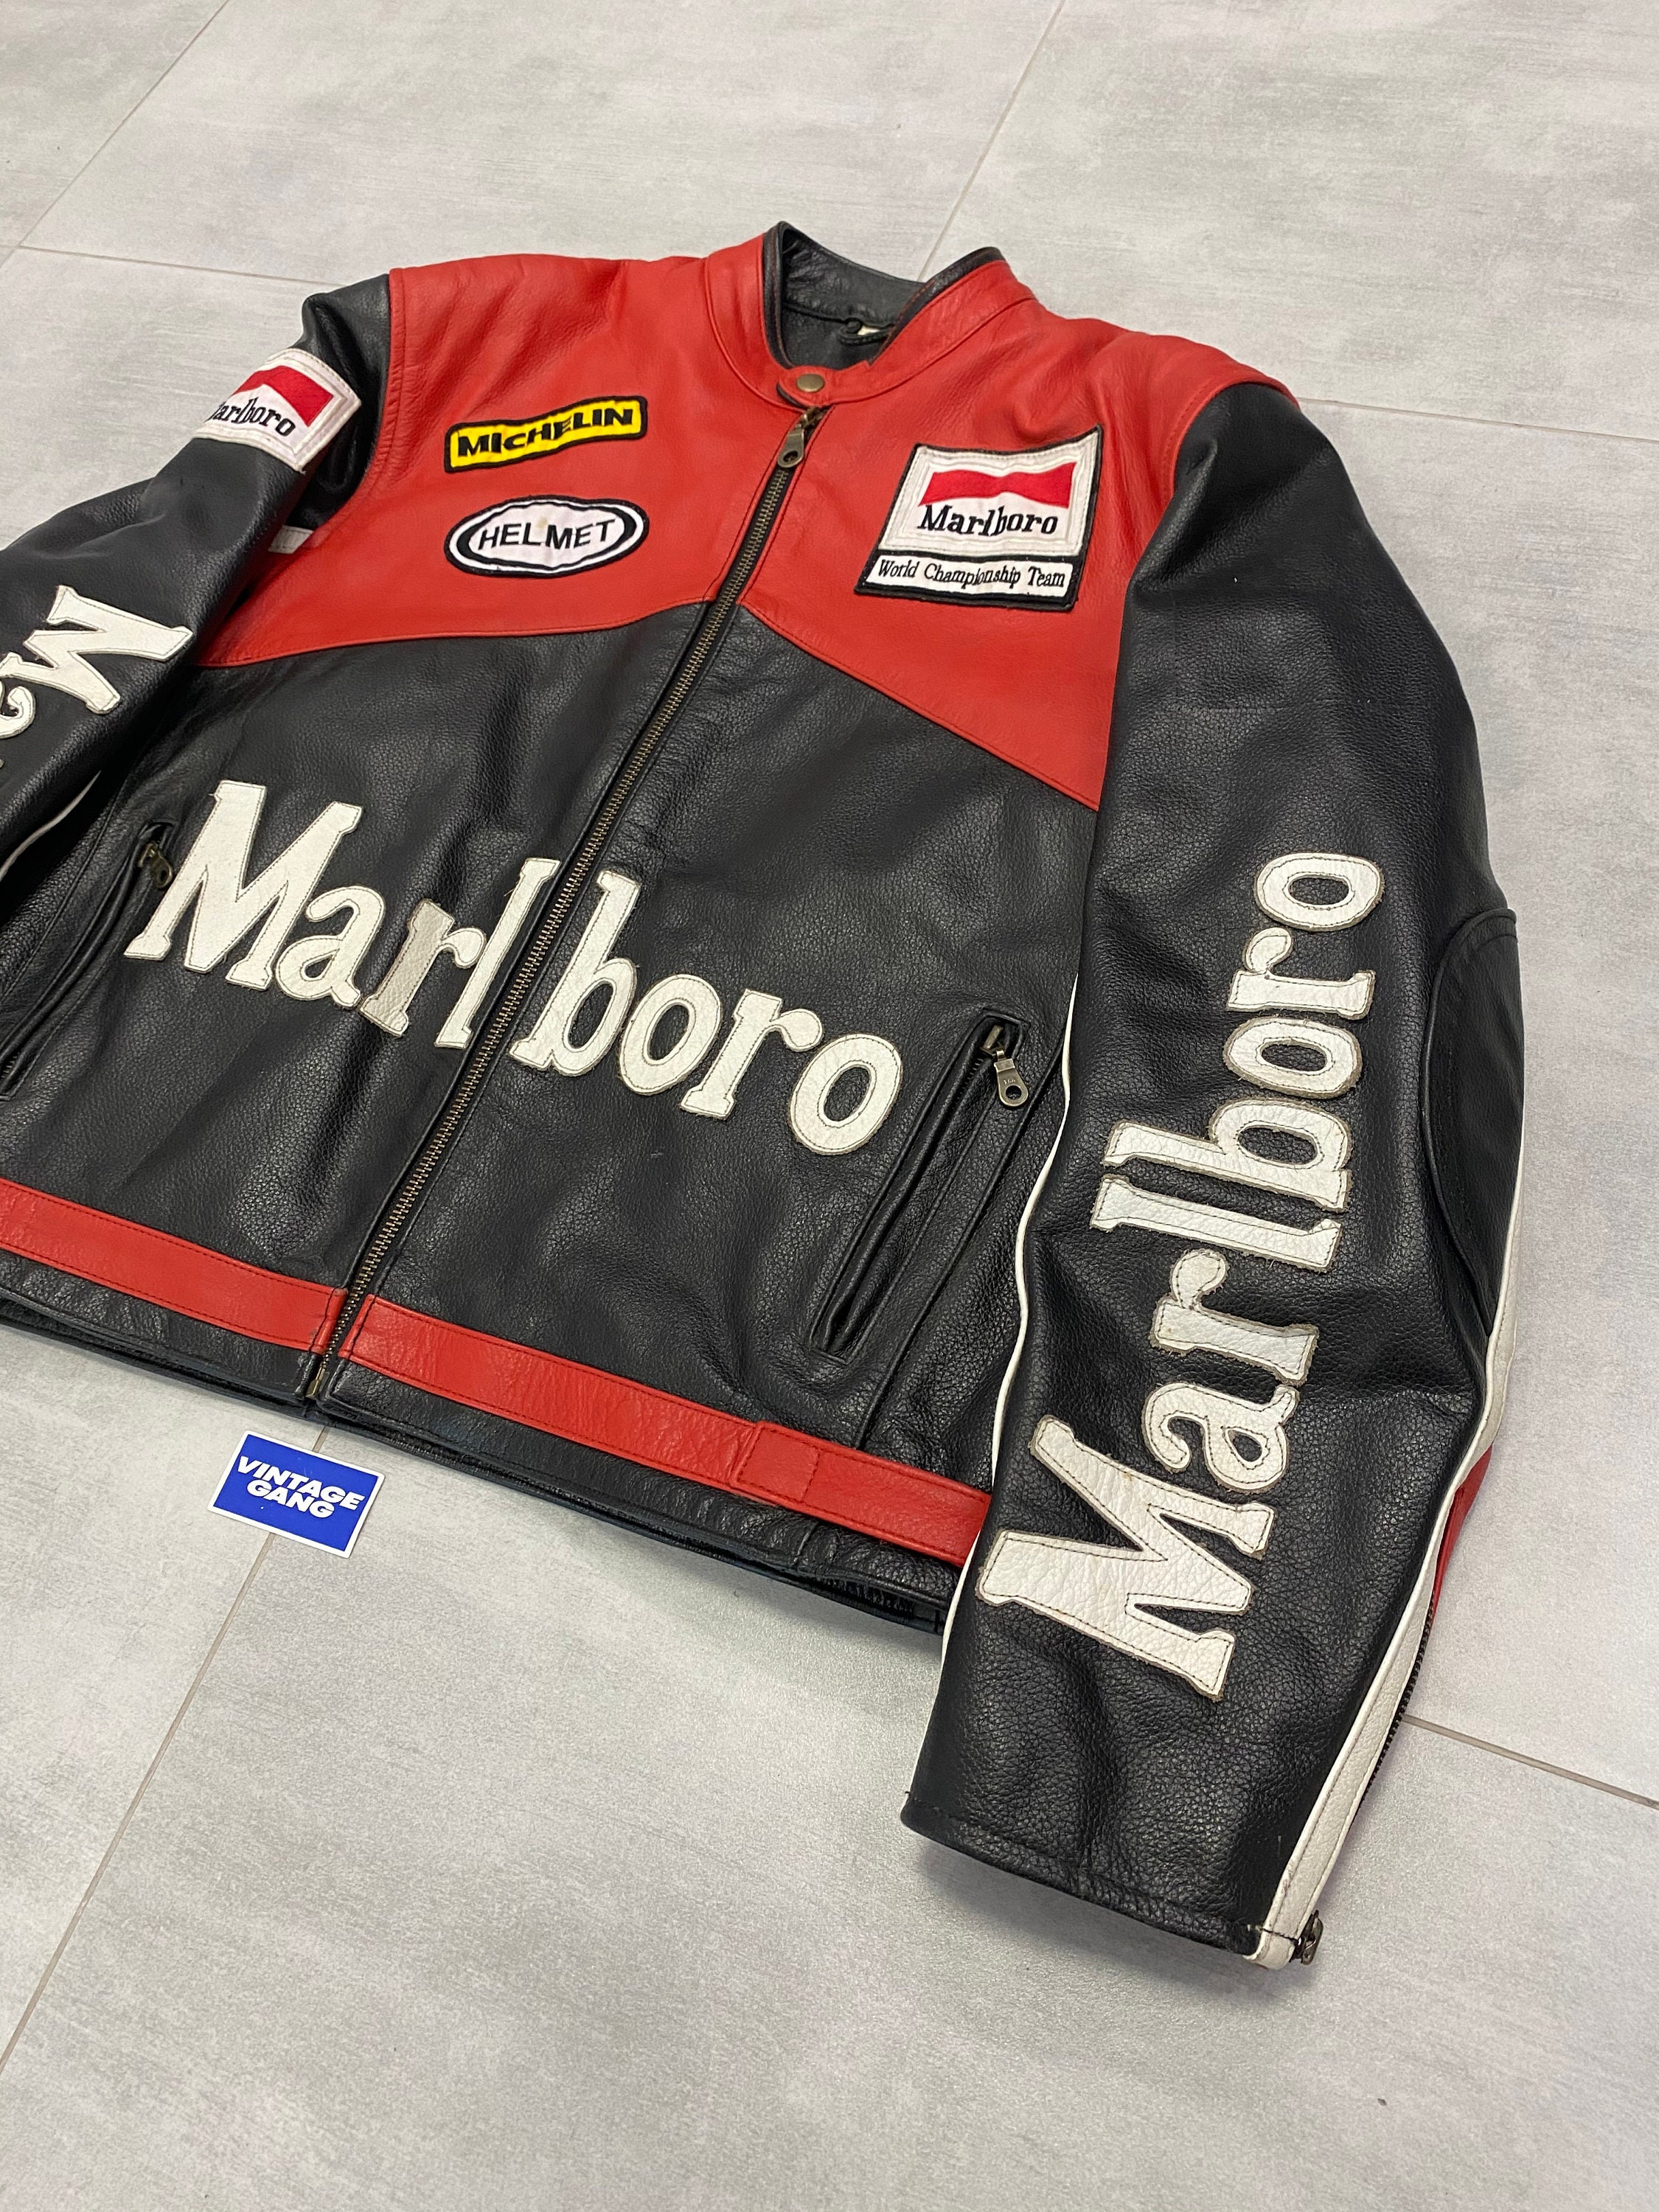 Marlboro leather jacket racing / Michelin / vintage 90s / | Etsy